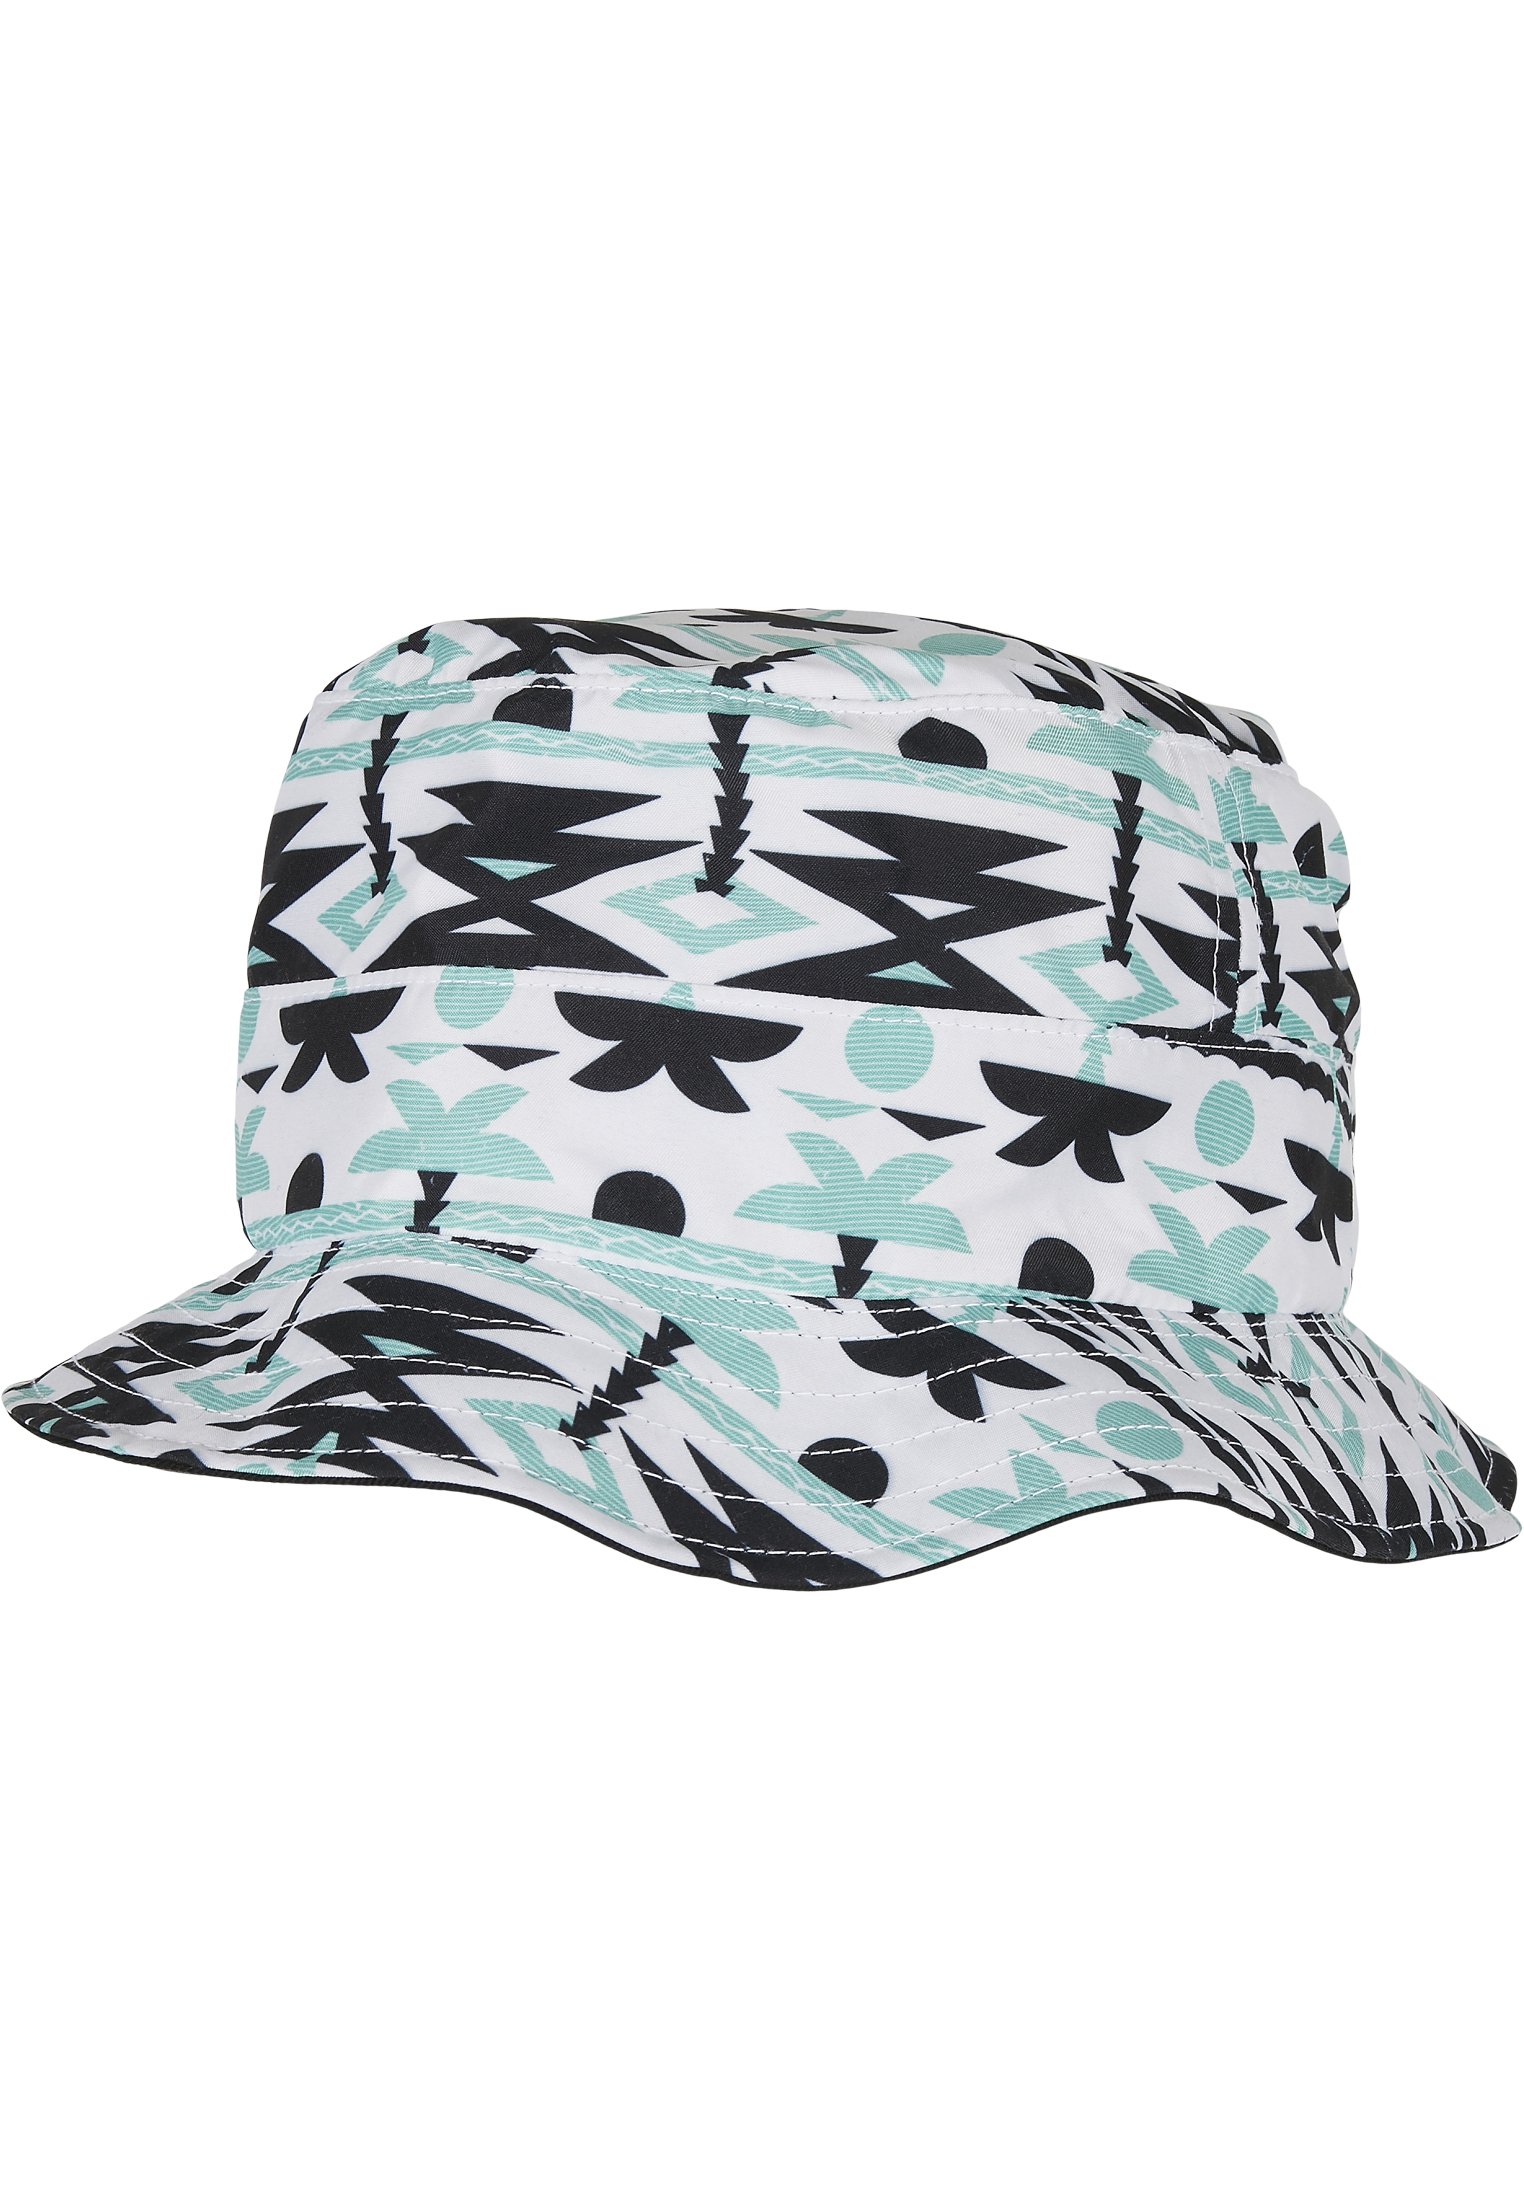 C&S WL Aztec Summer Reversible Bucket Hat black/mc one size